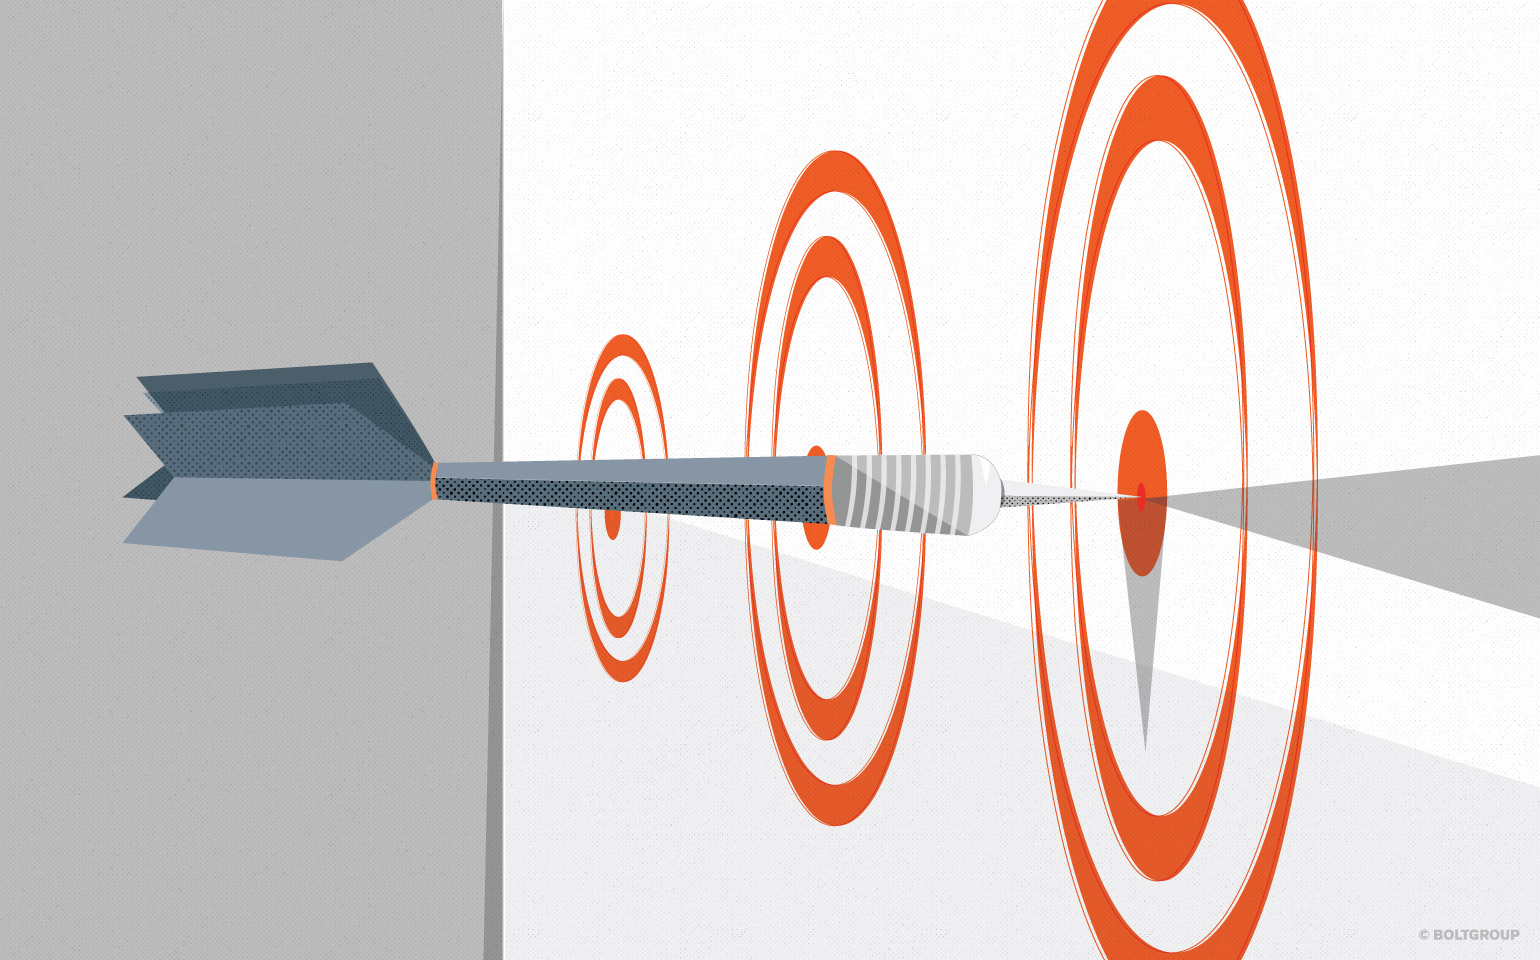 illlustration of dart hitting bullseye